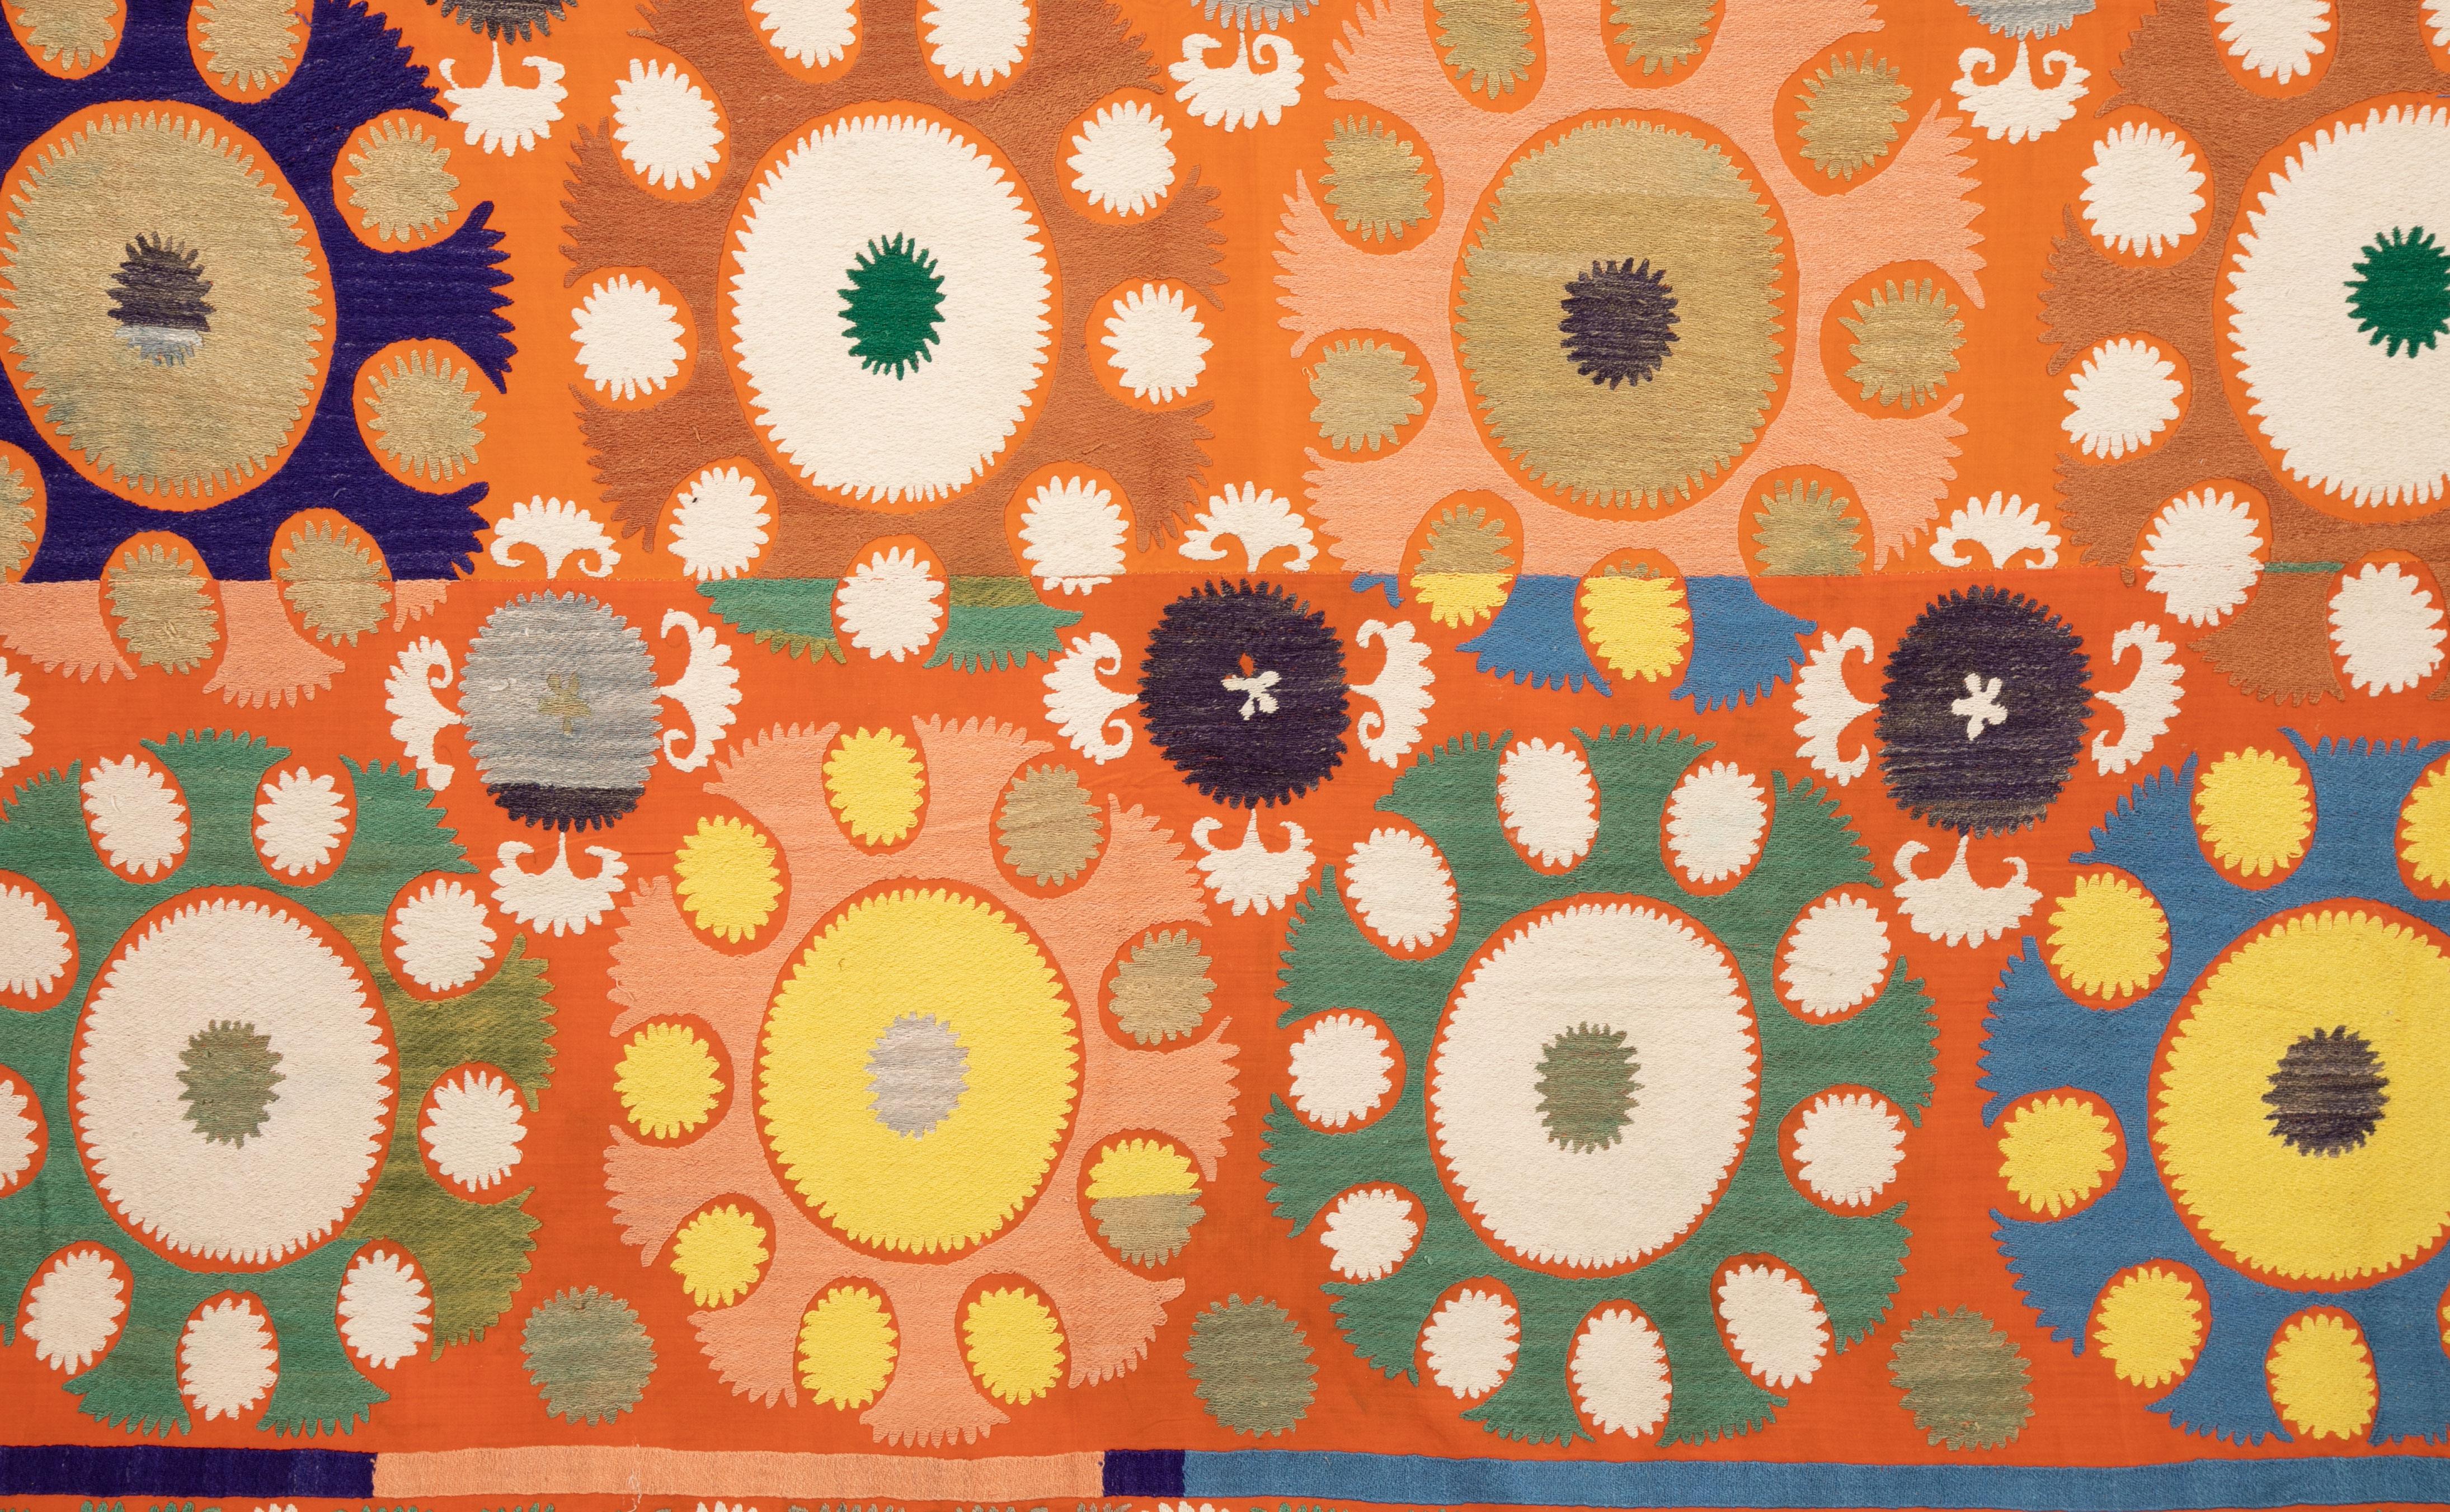 Embroidered Vintage Orange Suzani from Samarkand Uzbekistan, Central Asia, 1970s